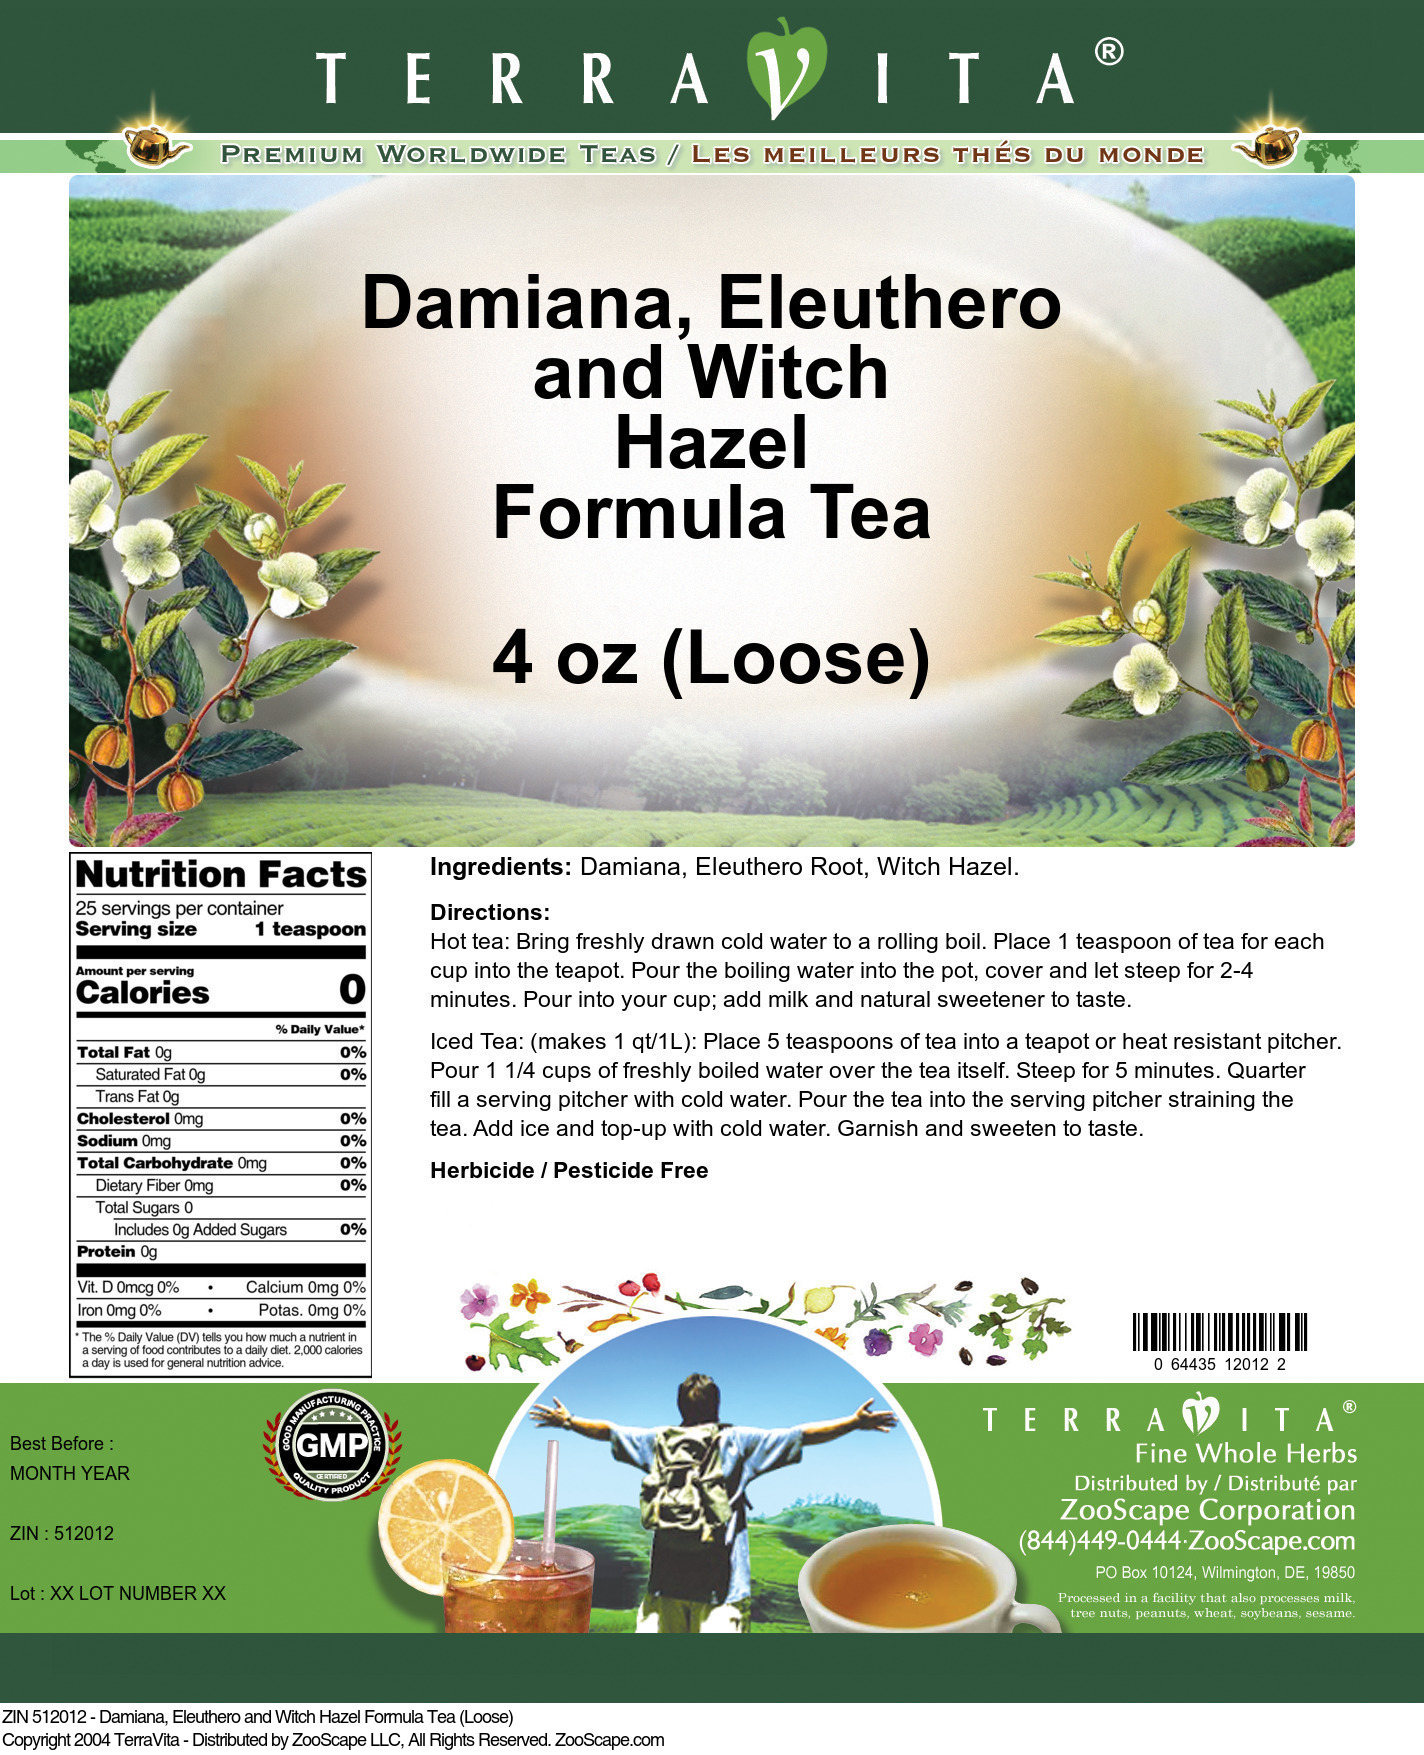 Damiana, Eleuthero and Witch Hazel Formula Tea (Loose) - Label